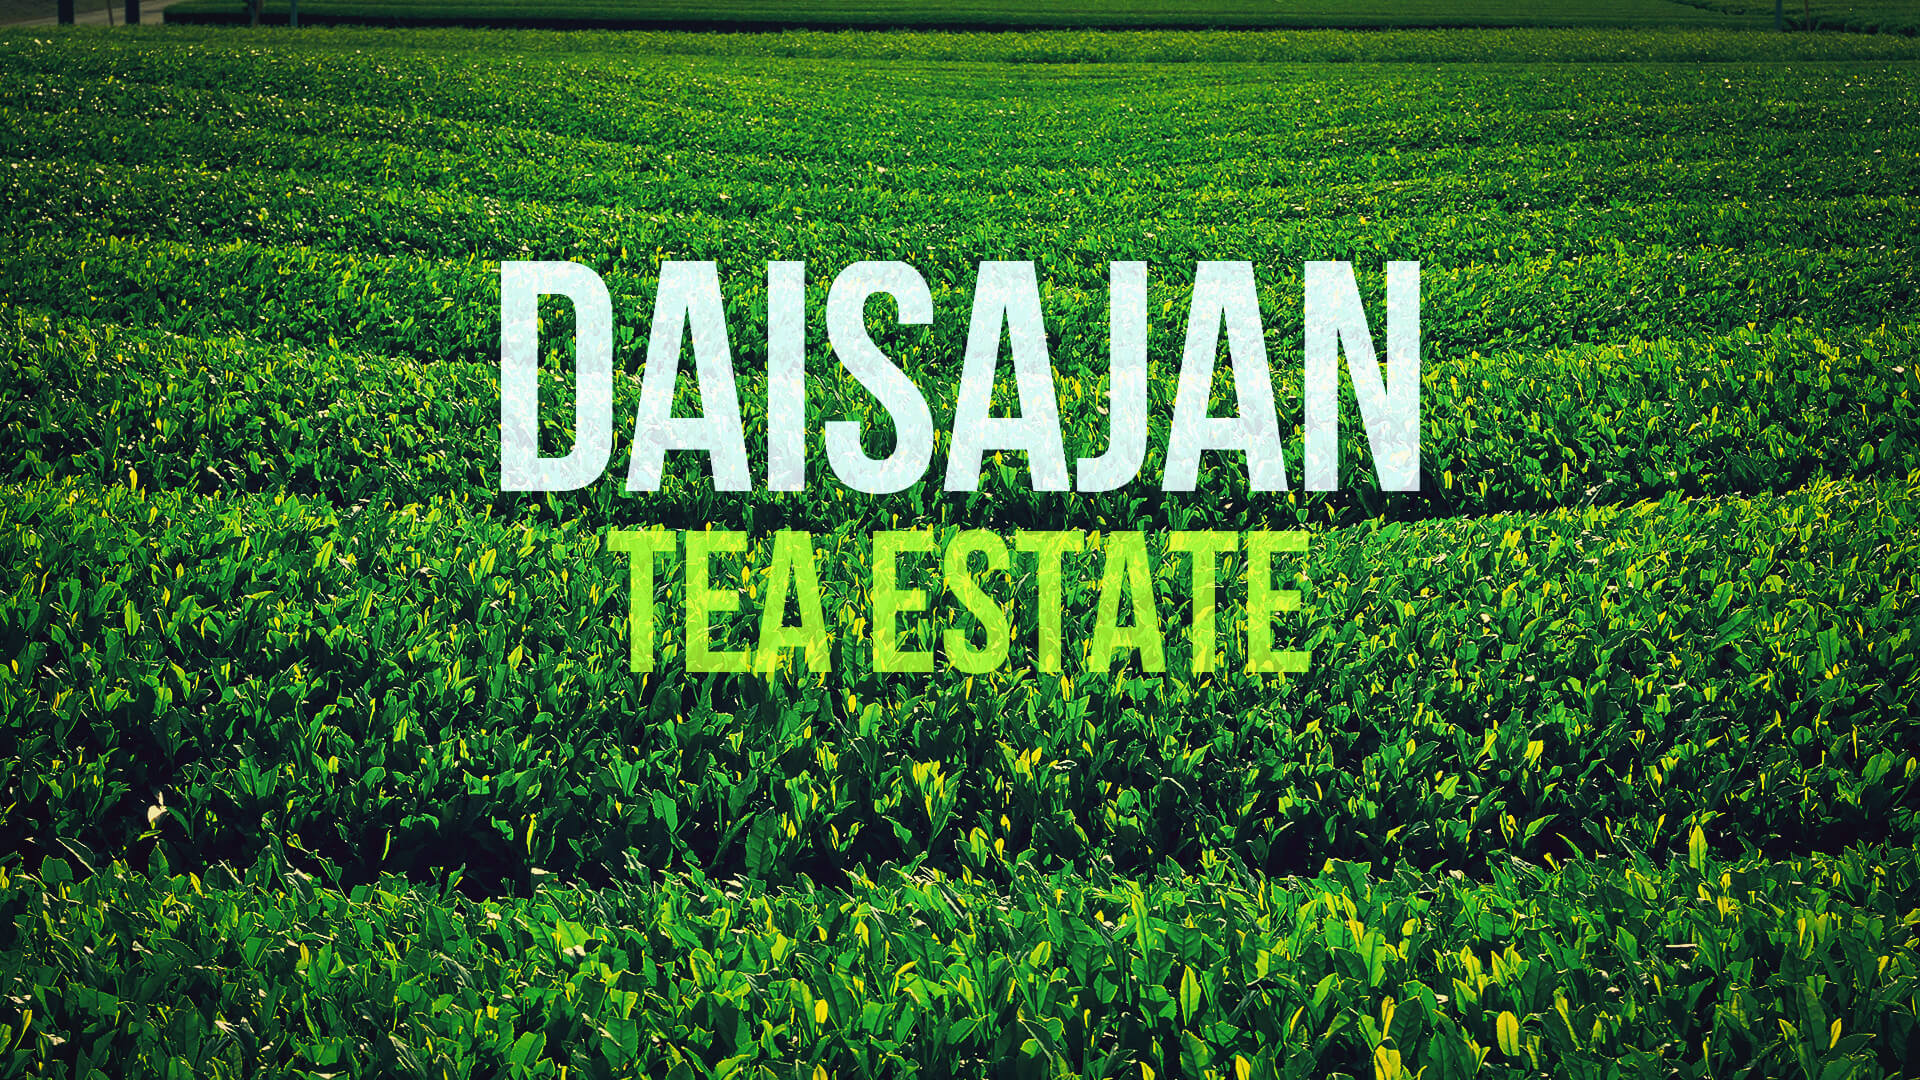 Daisajan Banner